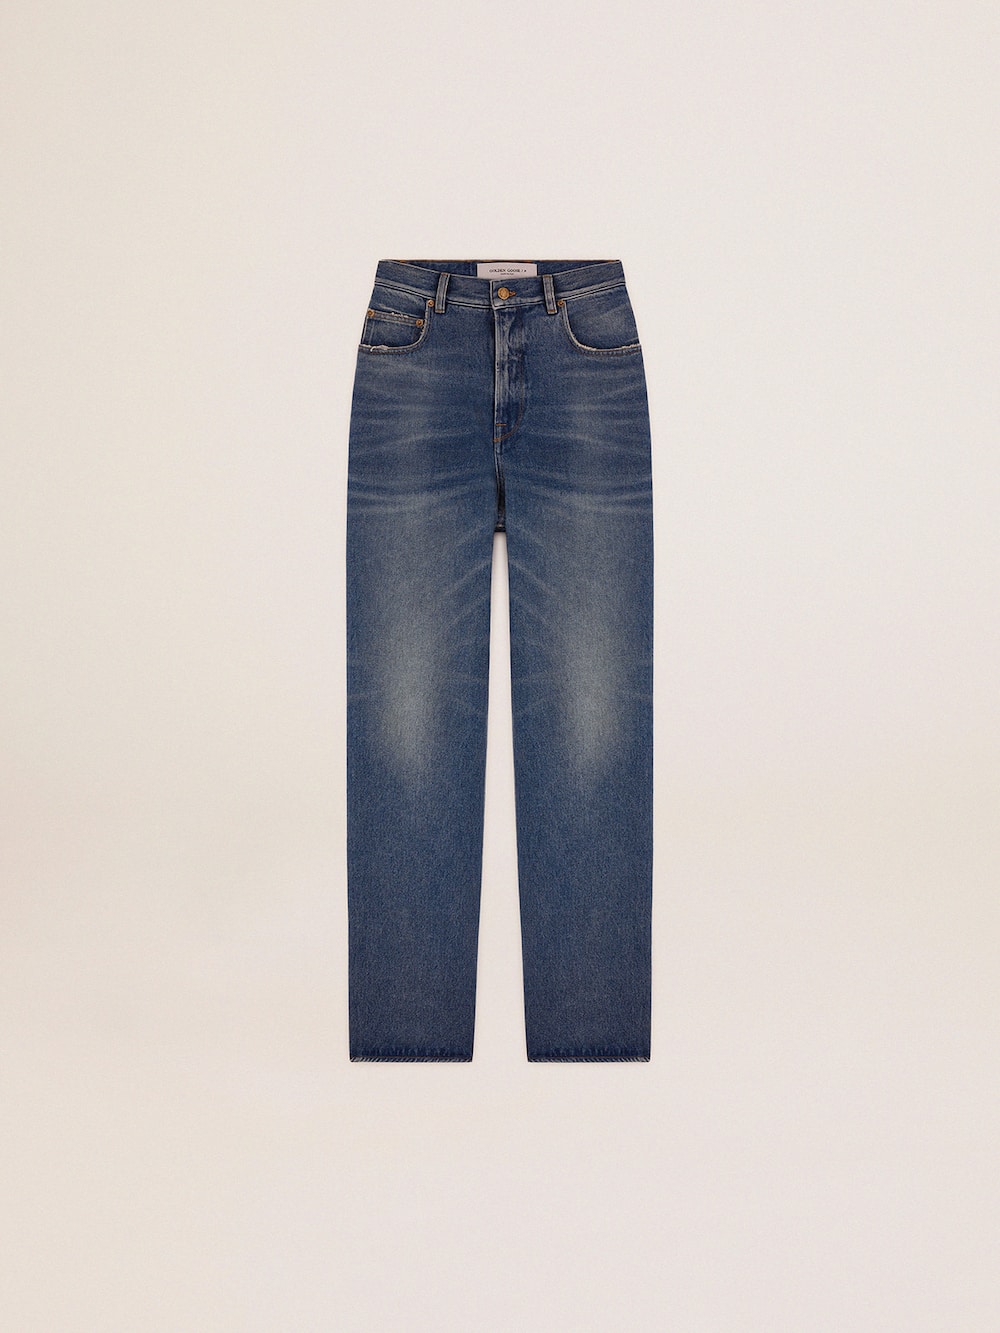 Golden Goose - Women's jeans with medium wash in 